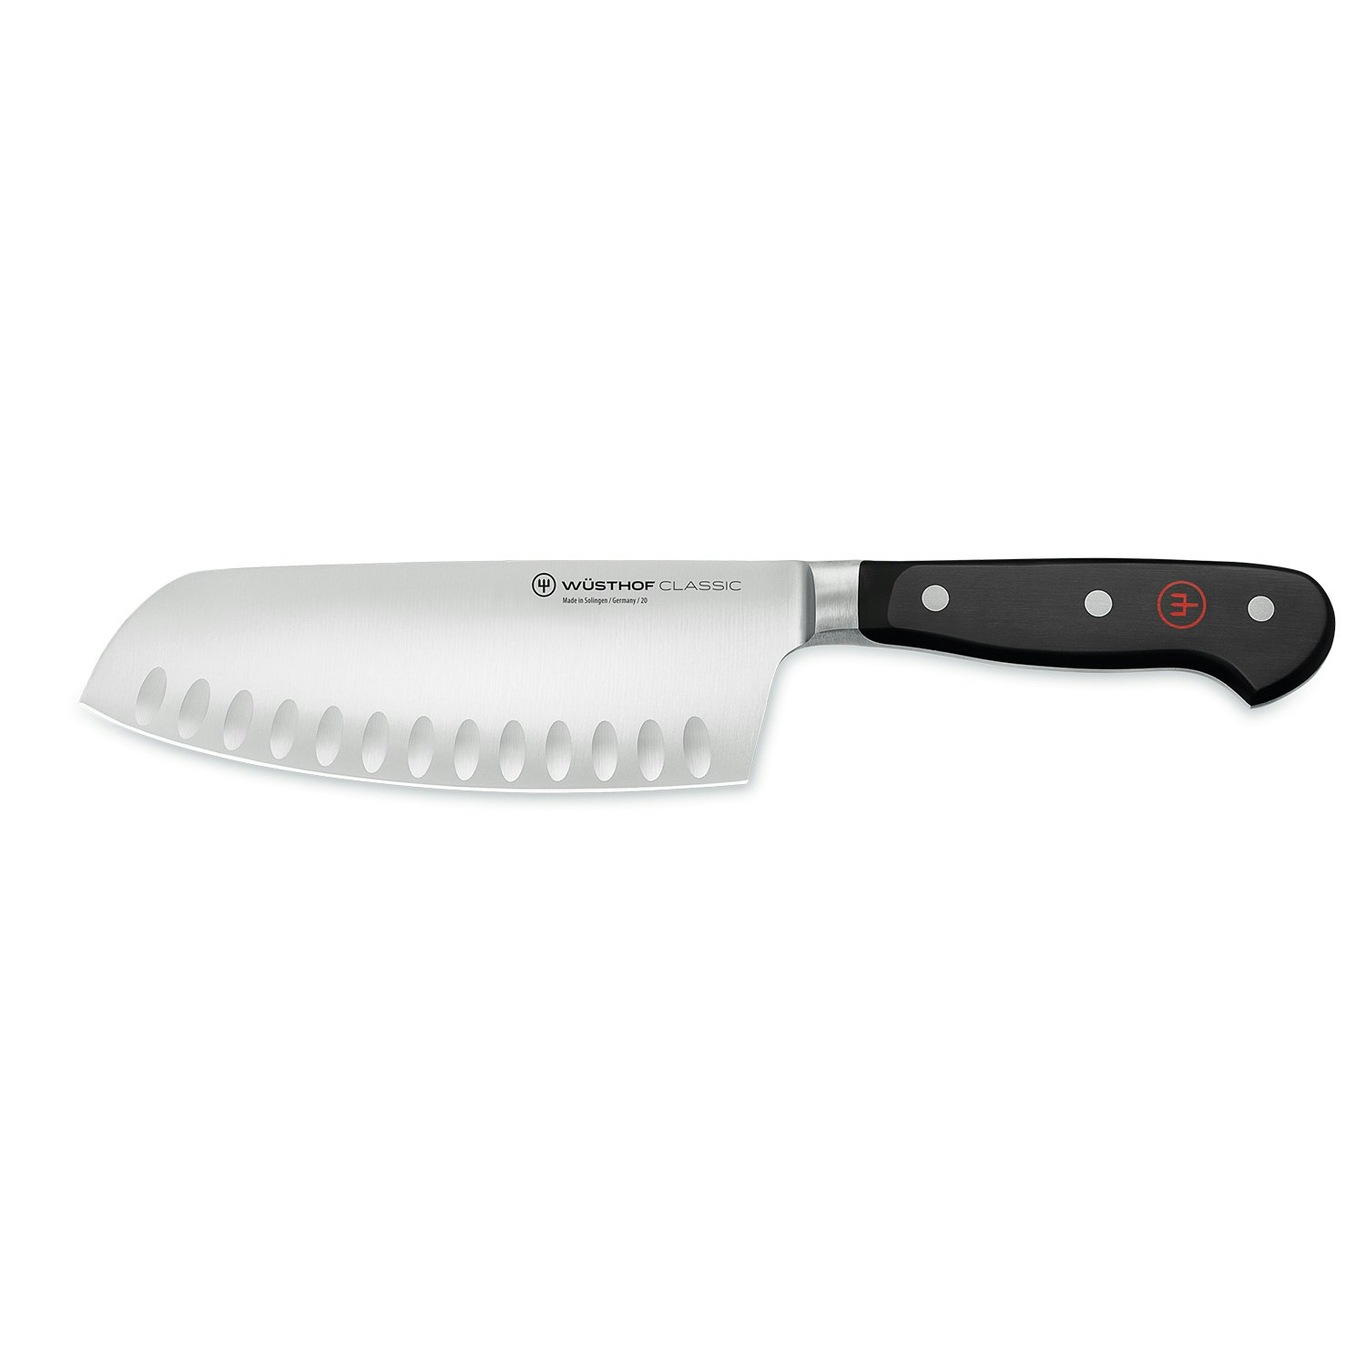 https://royaldesign.com/image/2/wusthof-classic-chai-dao-knife-17-cm-4?w=800&quality=80